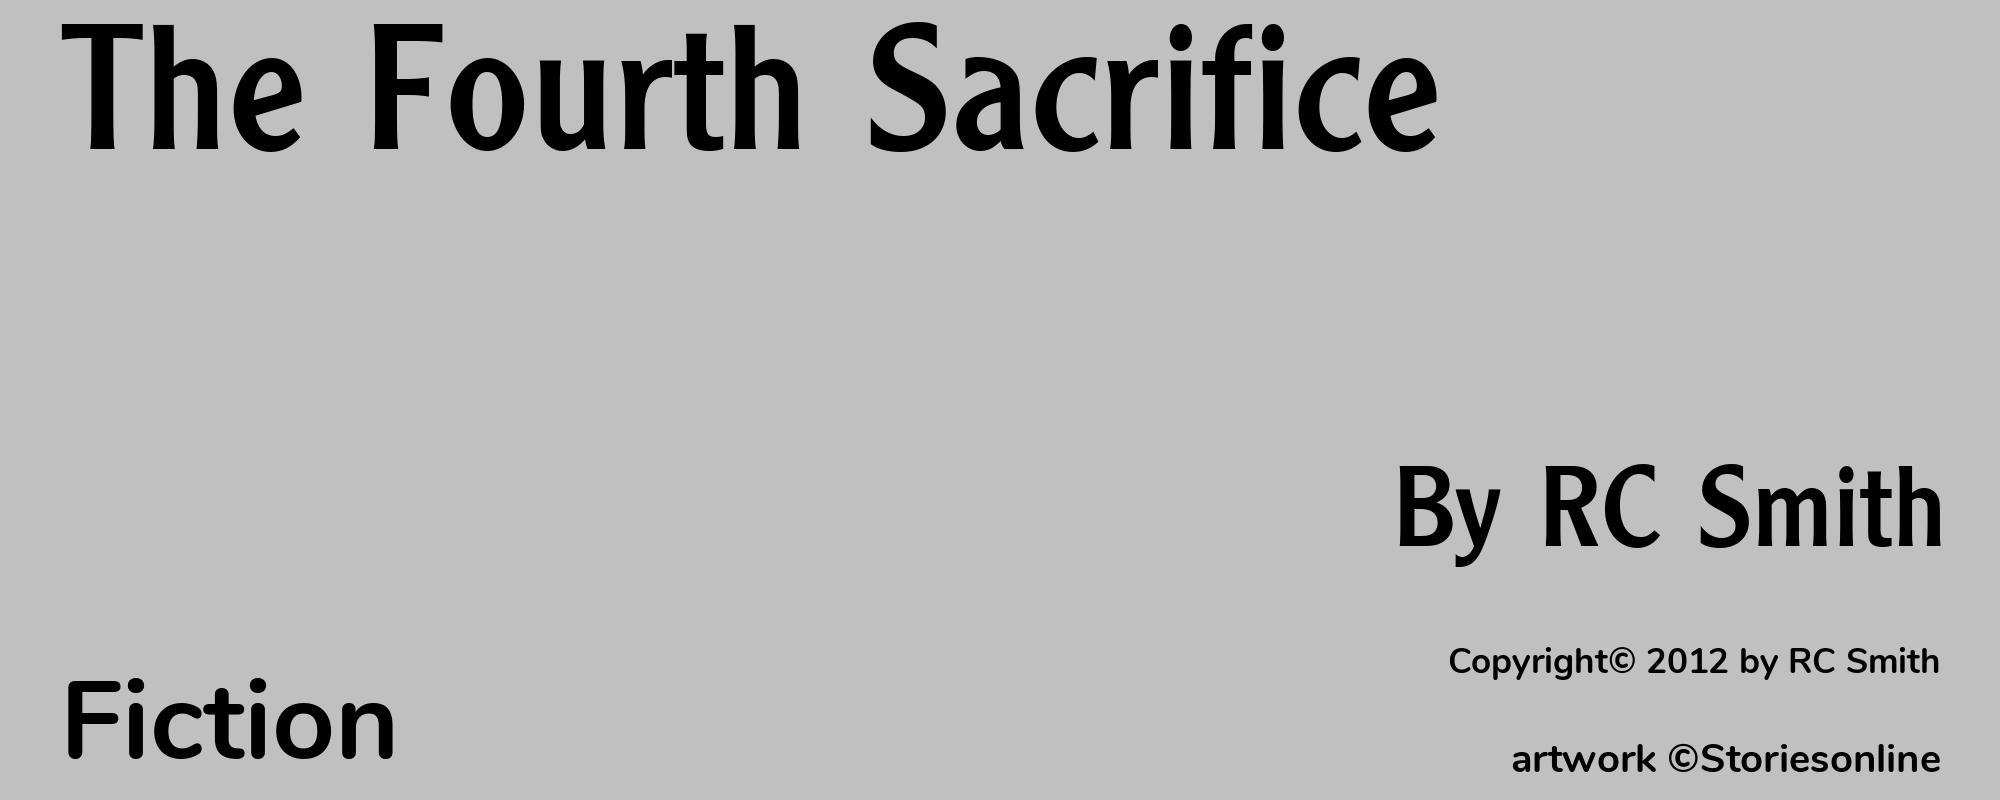 The Fourth Sacrifice - Cover